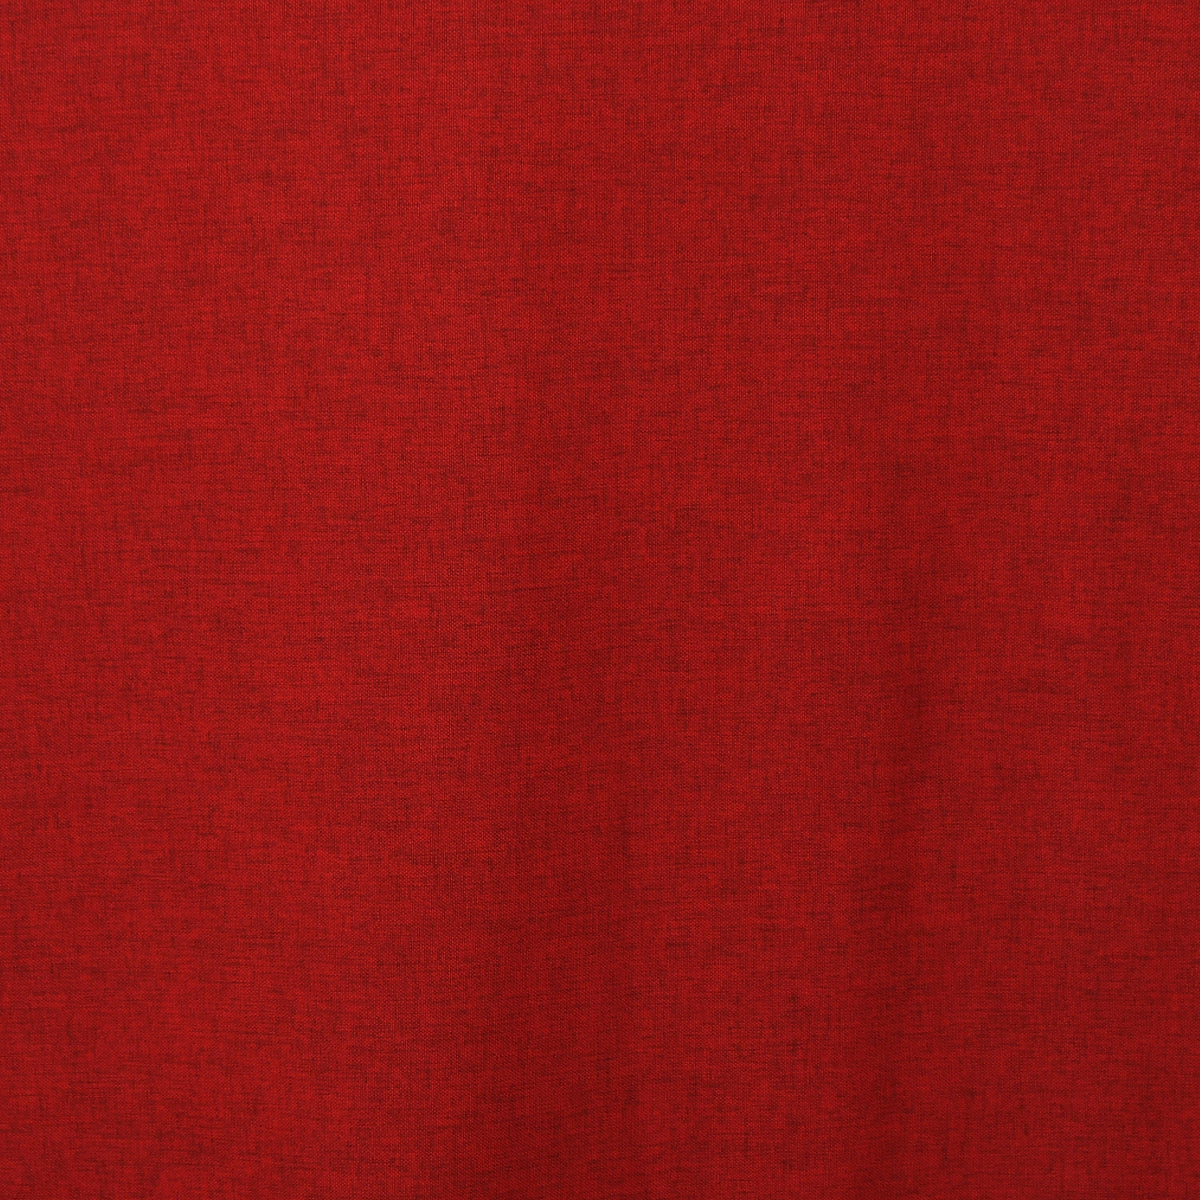 Night curtain red Linda